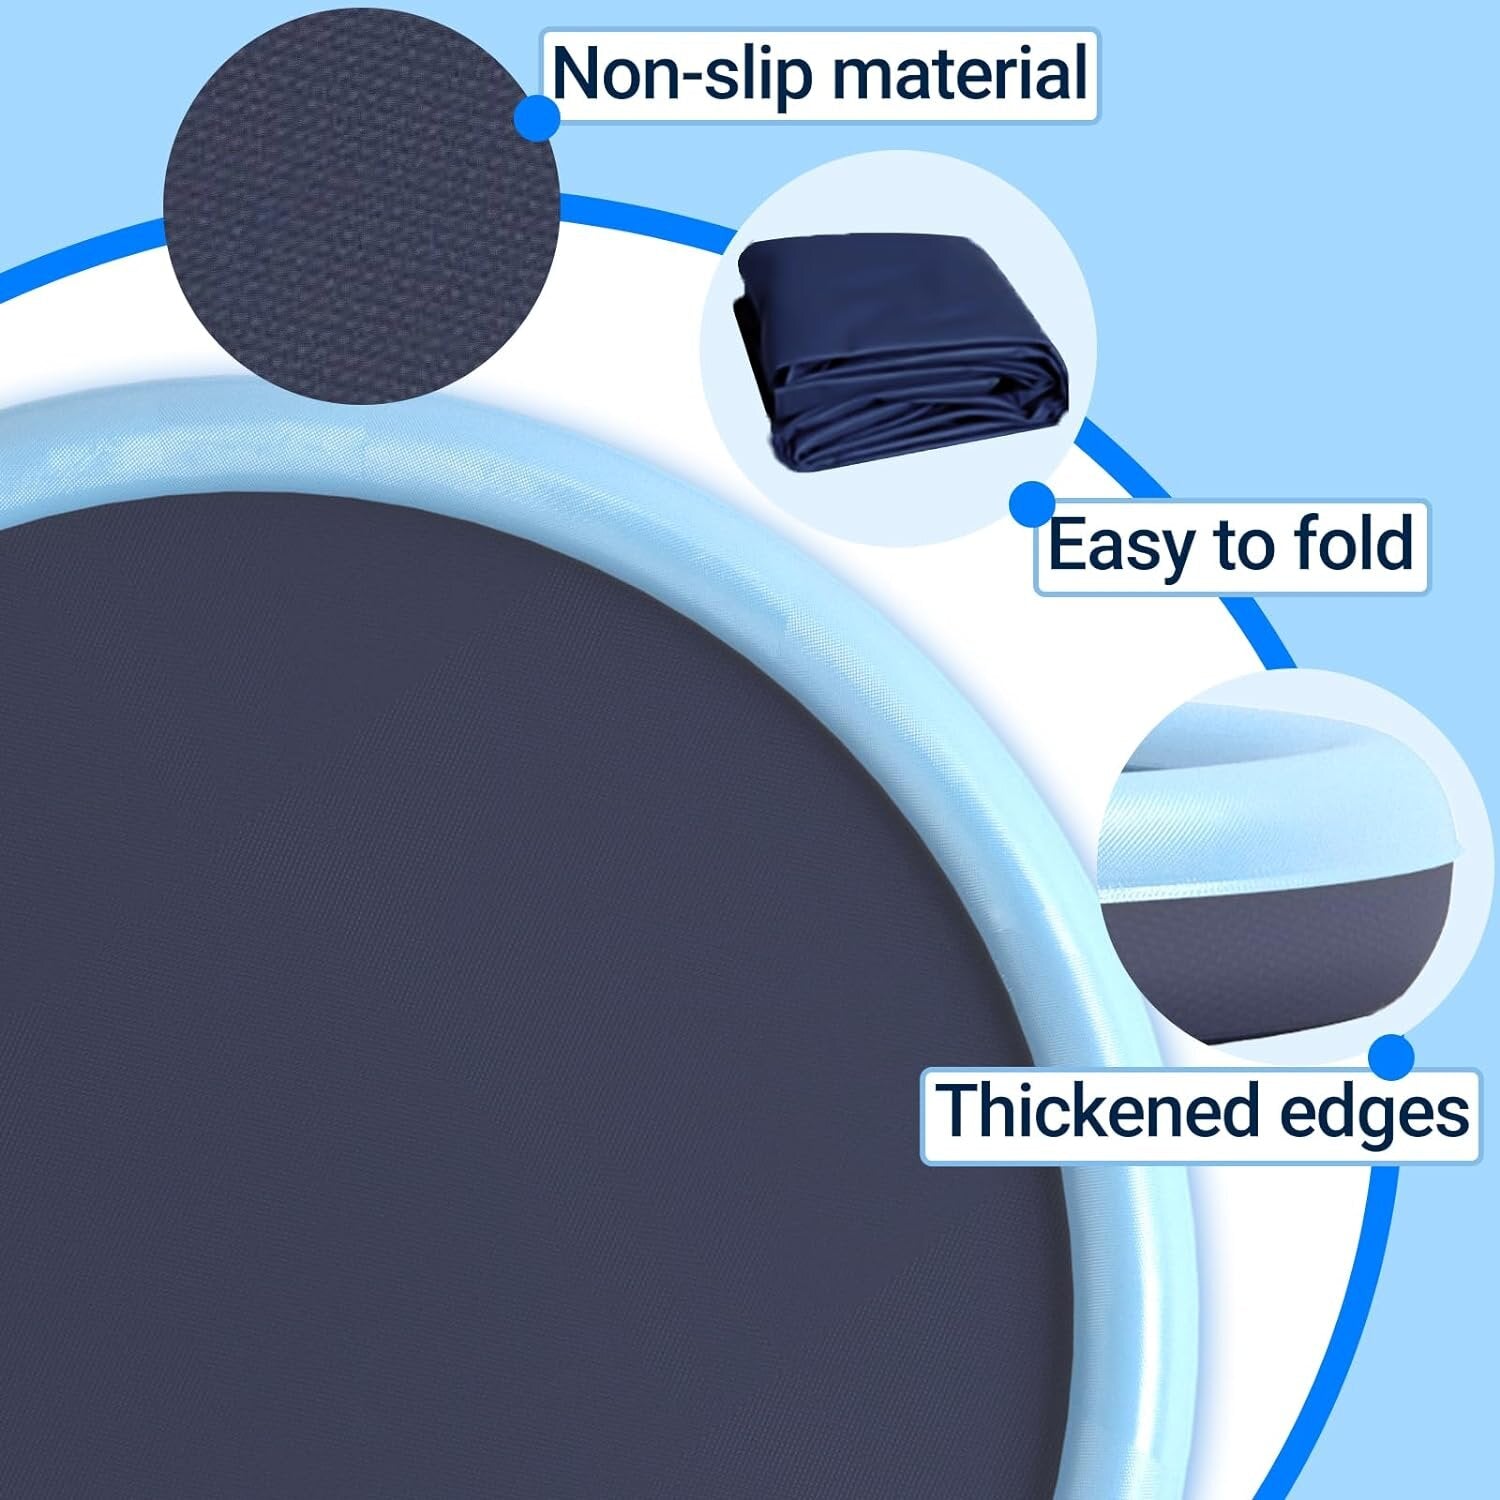 Splash pad is made of BPA-free, high-quality PVC material.